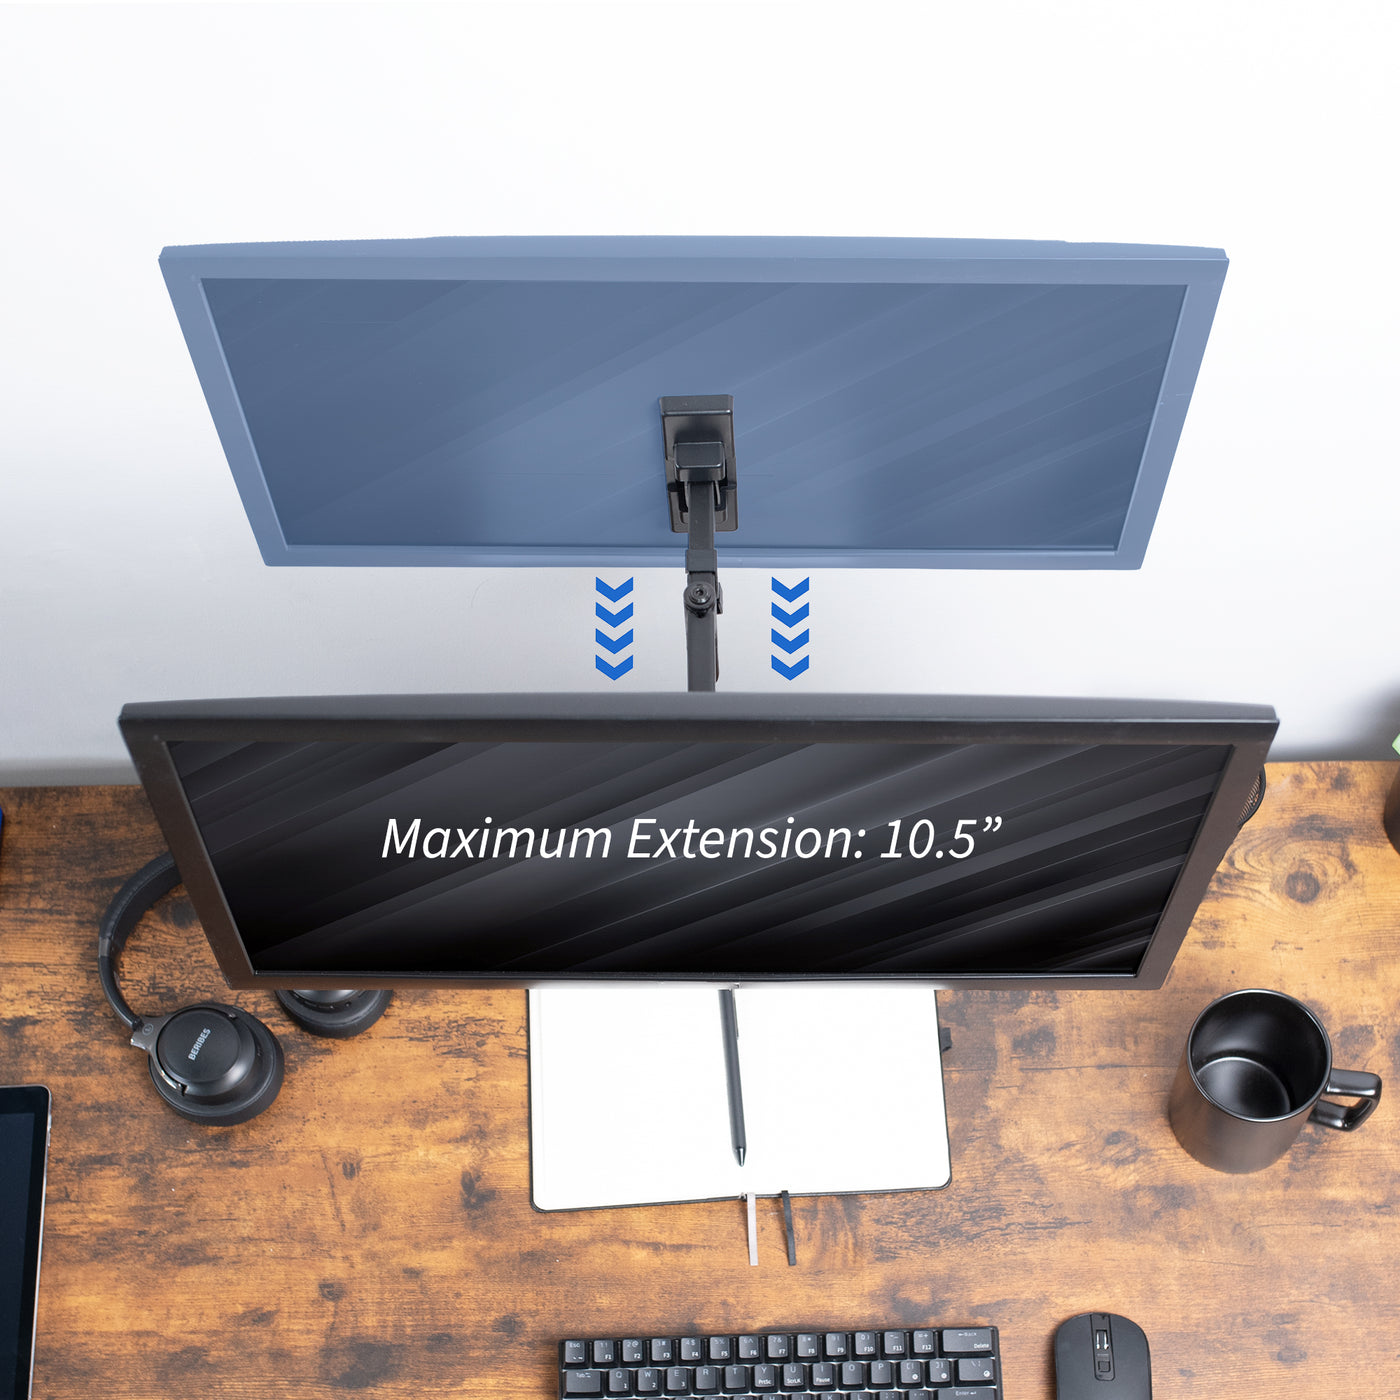 Sturdy adjustable single monitor ergonomic wall mount for office workstation.